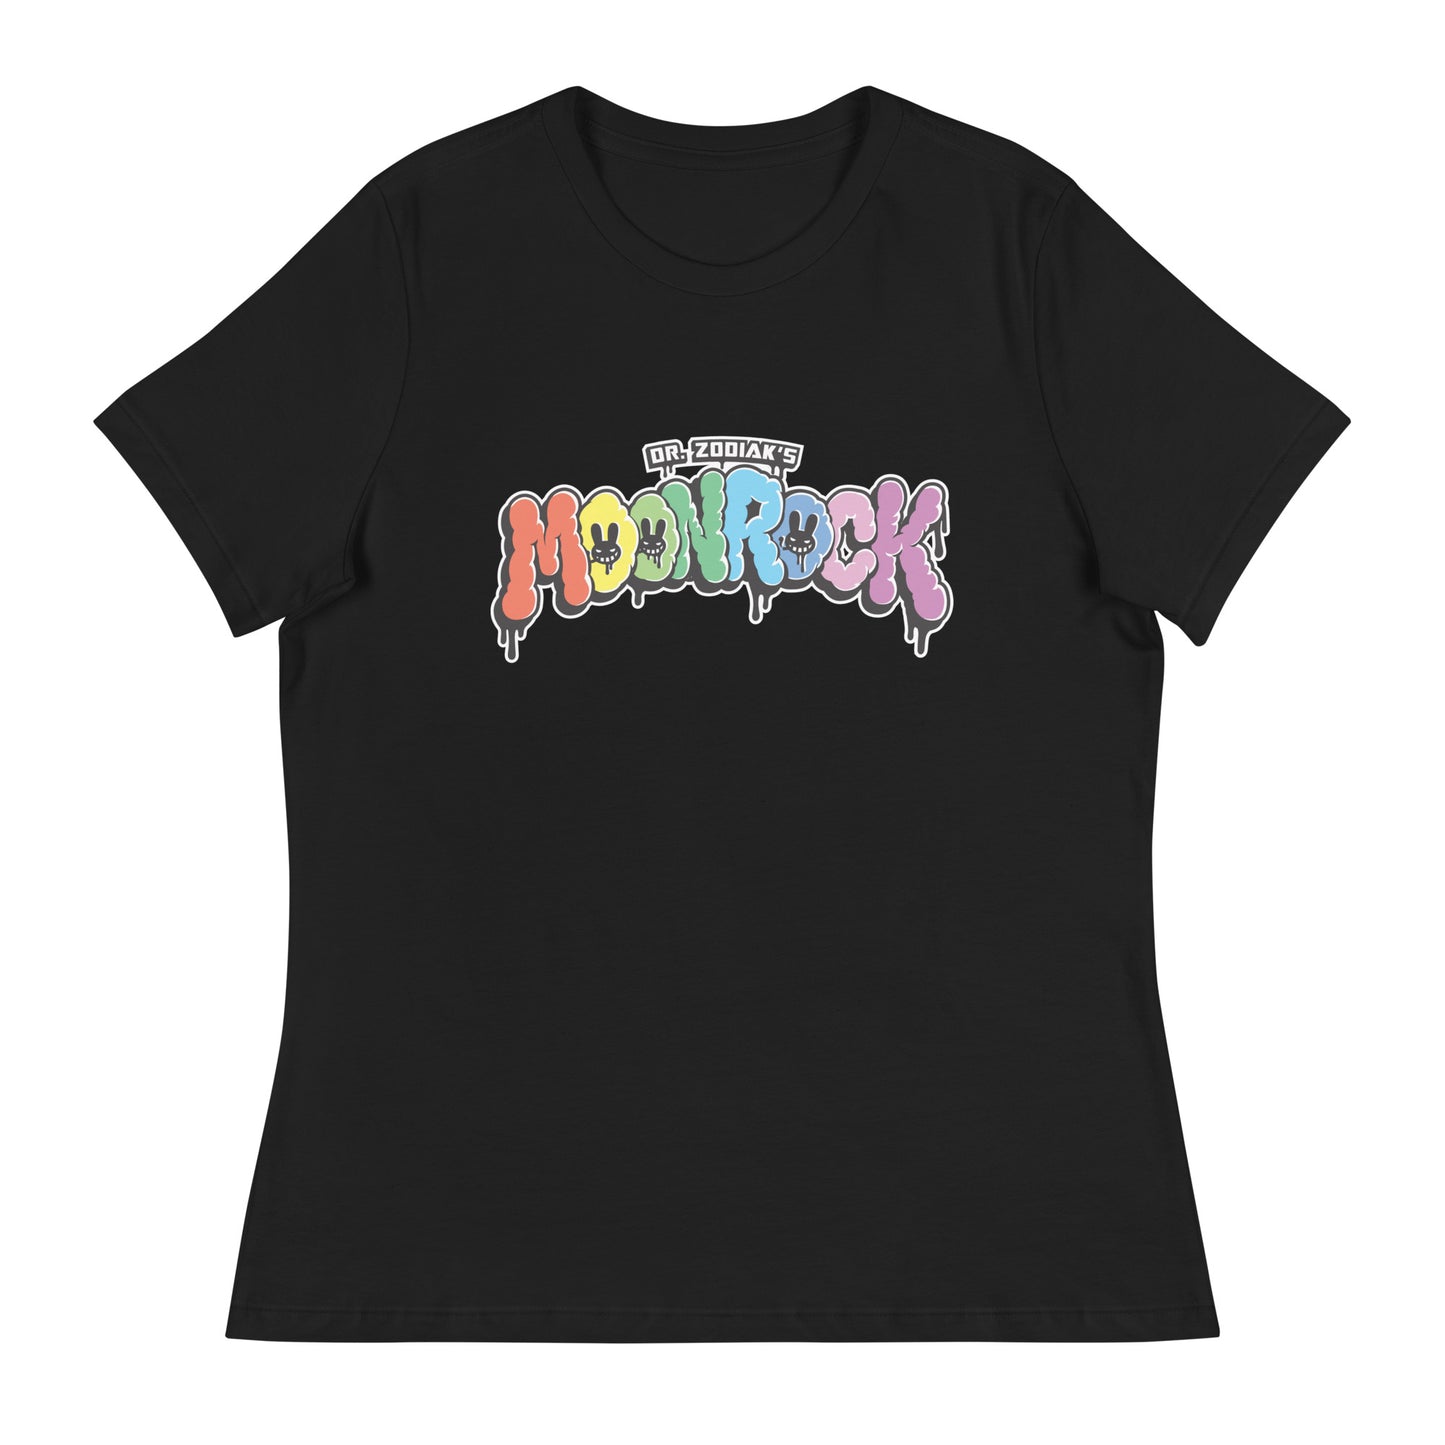 MOONROCK - COLORS - Women's Relaxed T-Shirt